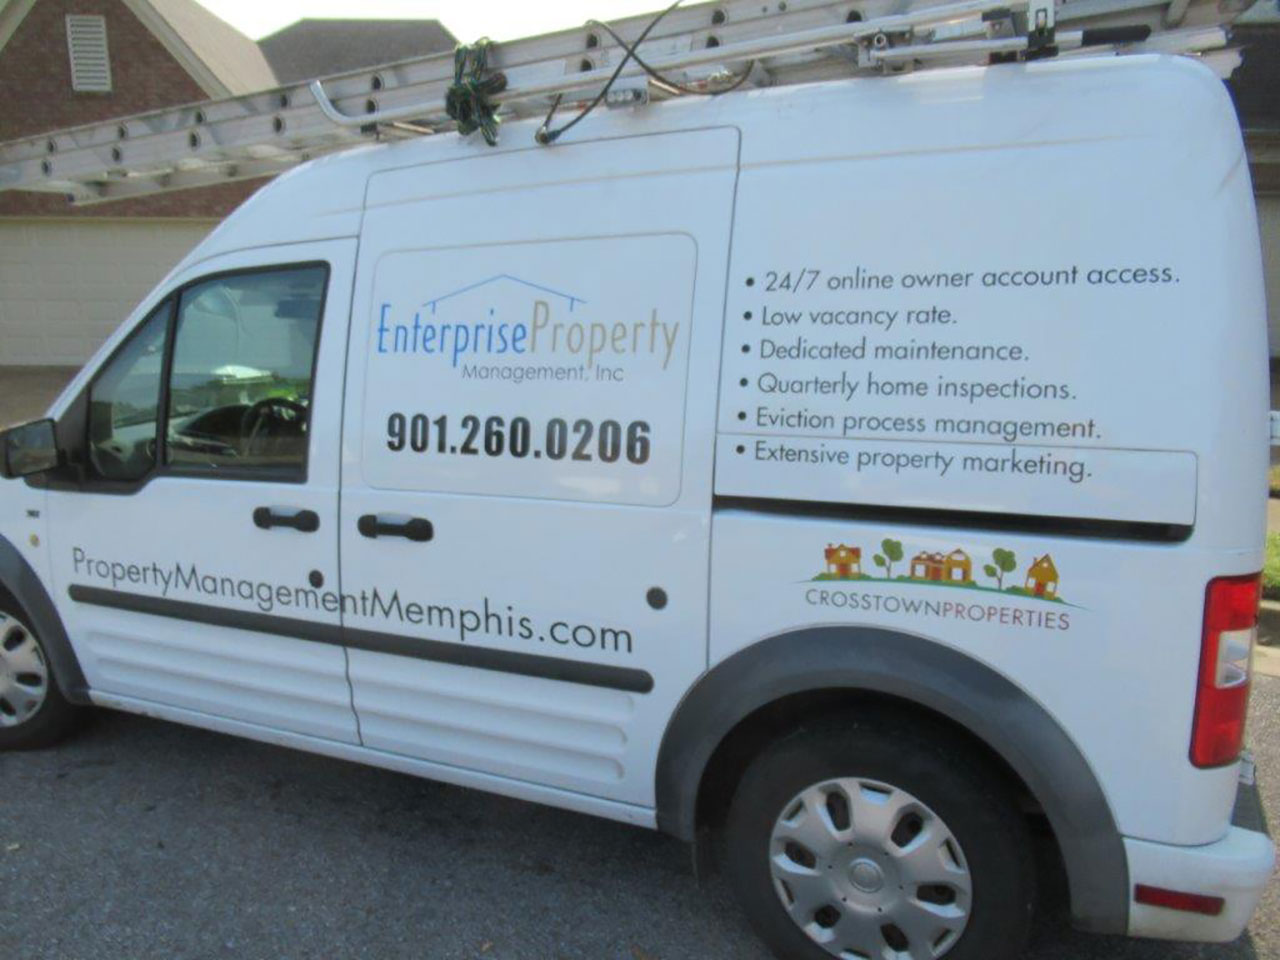 Enterprise Property Management, Inc. Maintenance Van: Side shot of EPM's branded maintenance van.